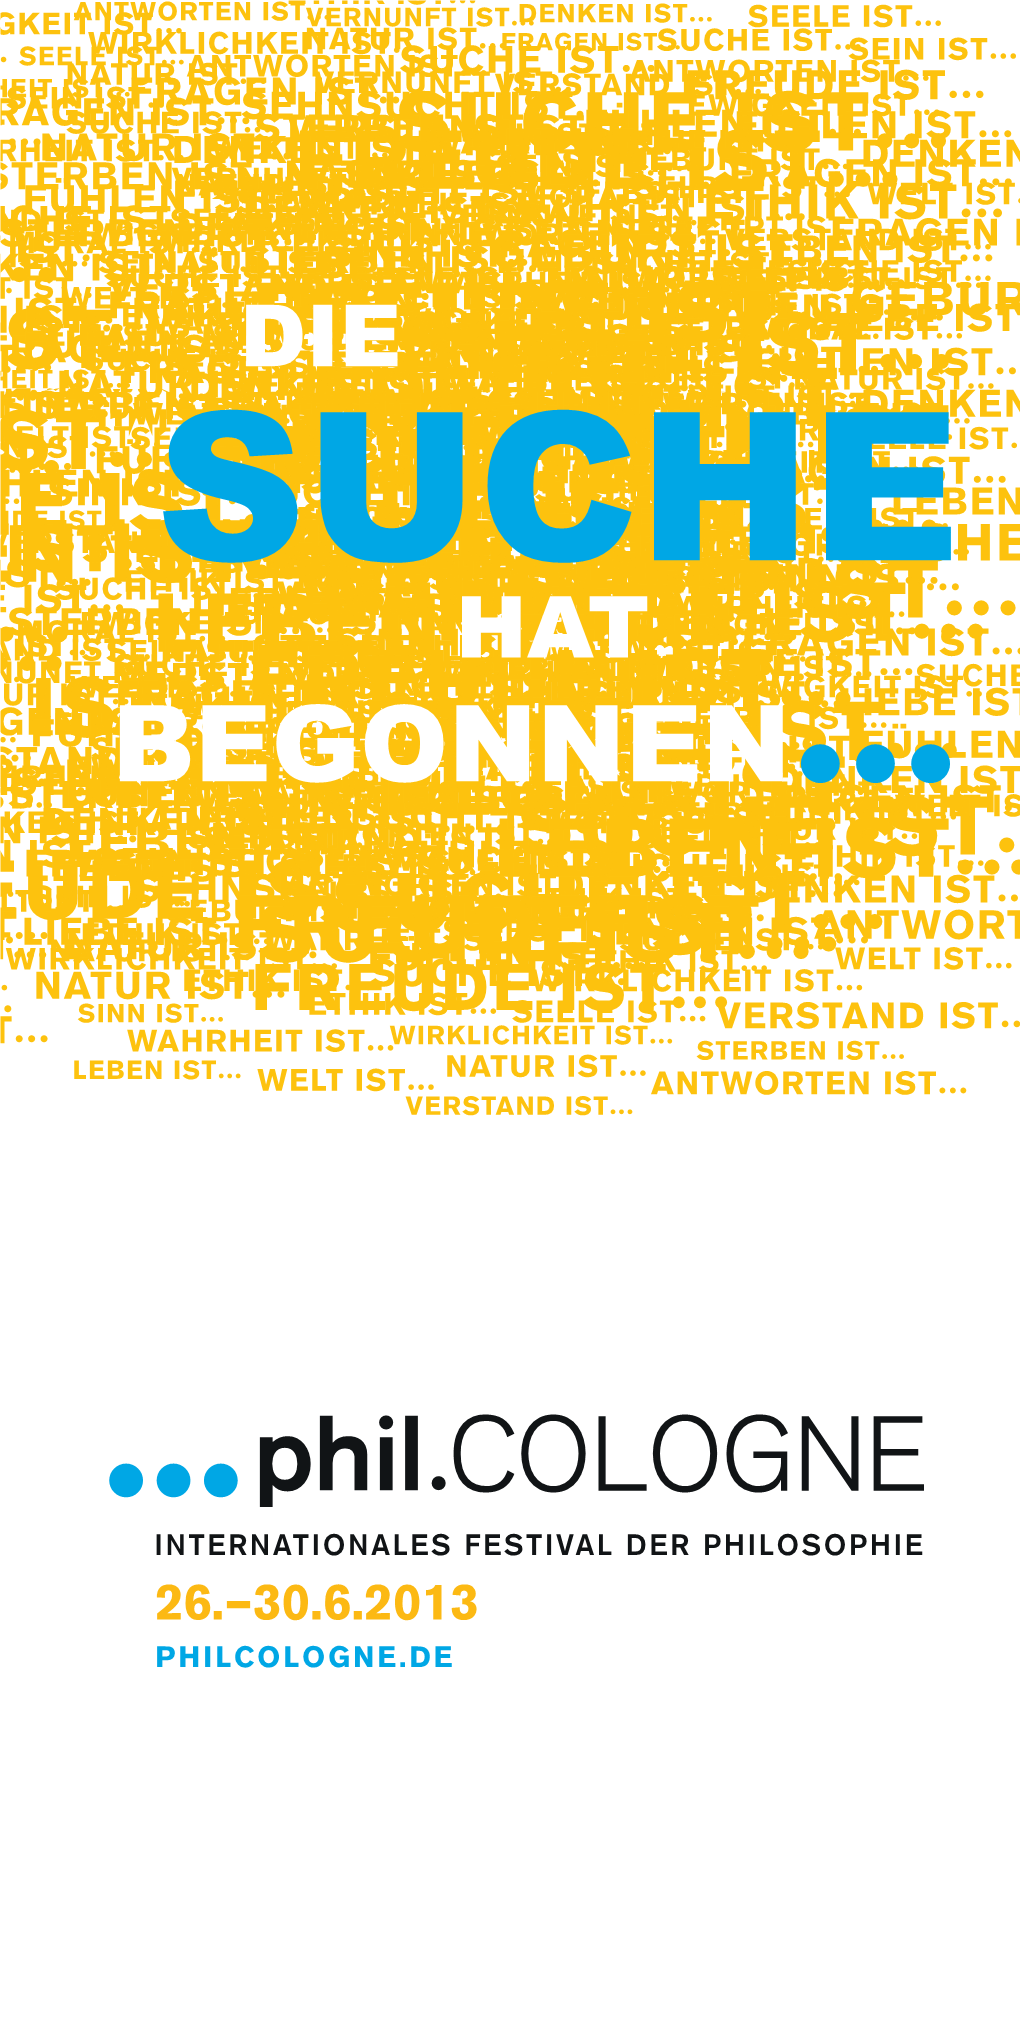 Programmheift Phil.Cologne 2013